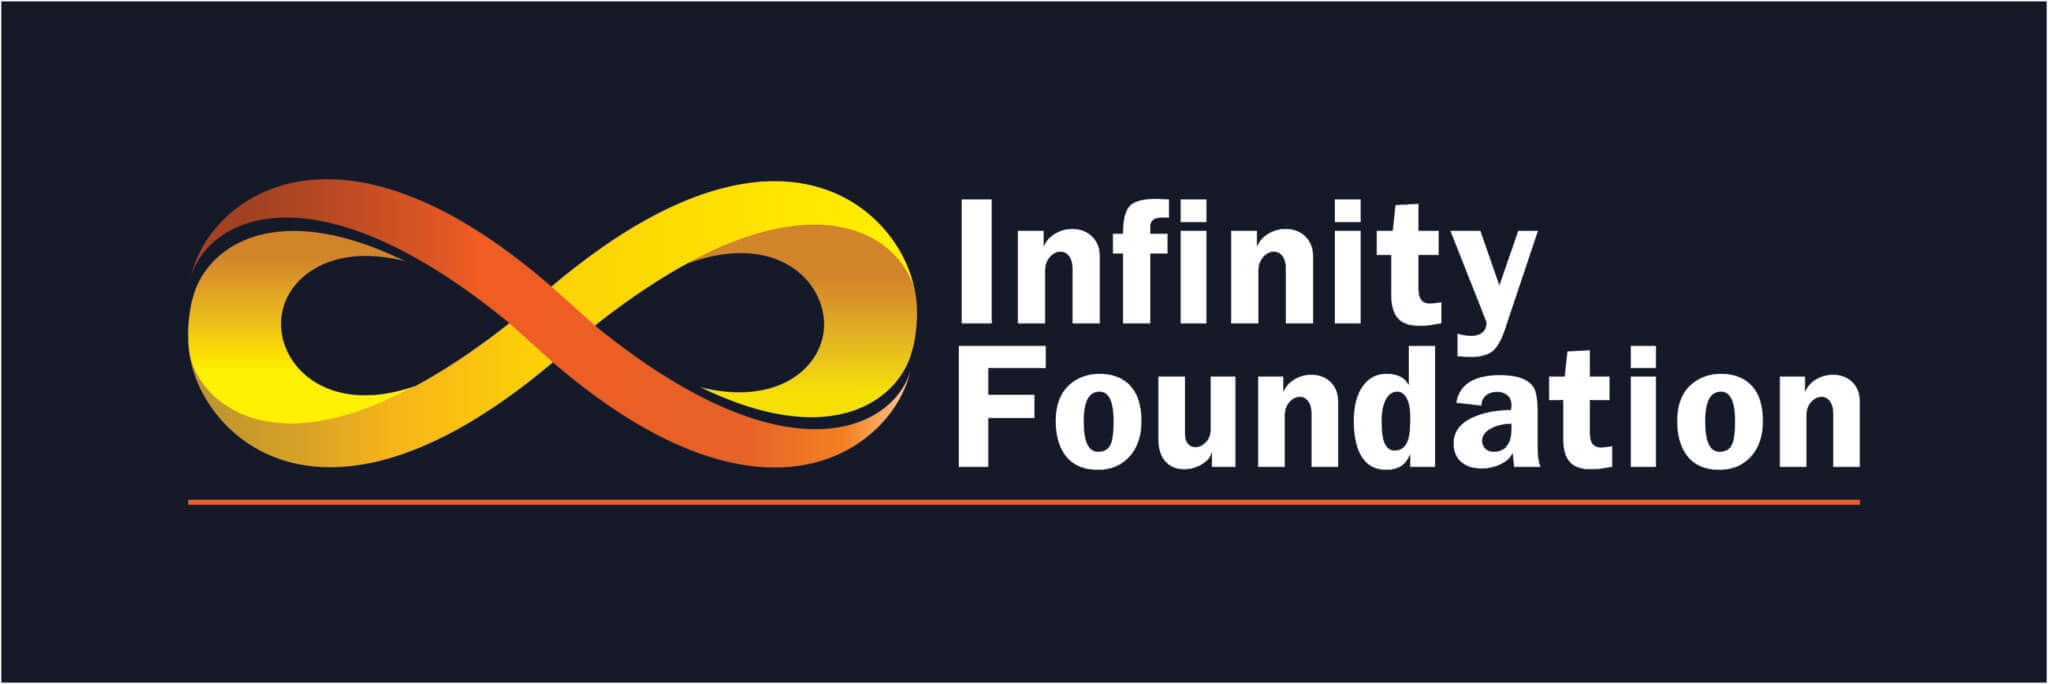 Infinity-Foundation-no-tagline